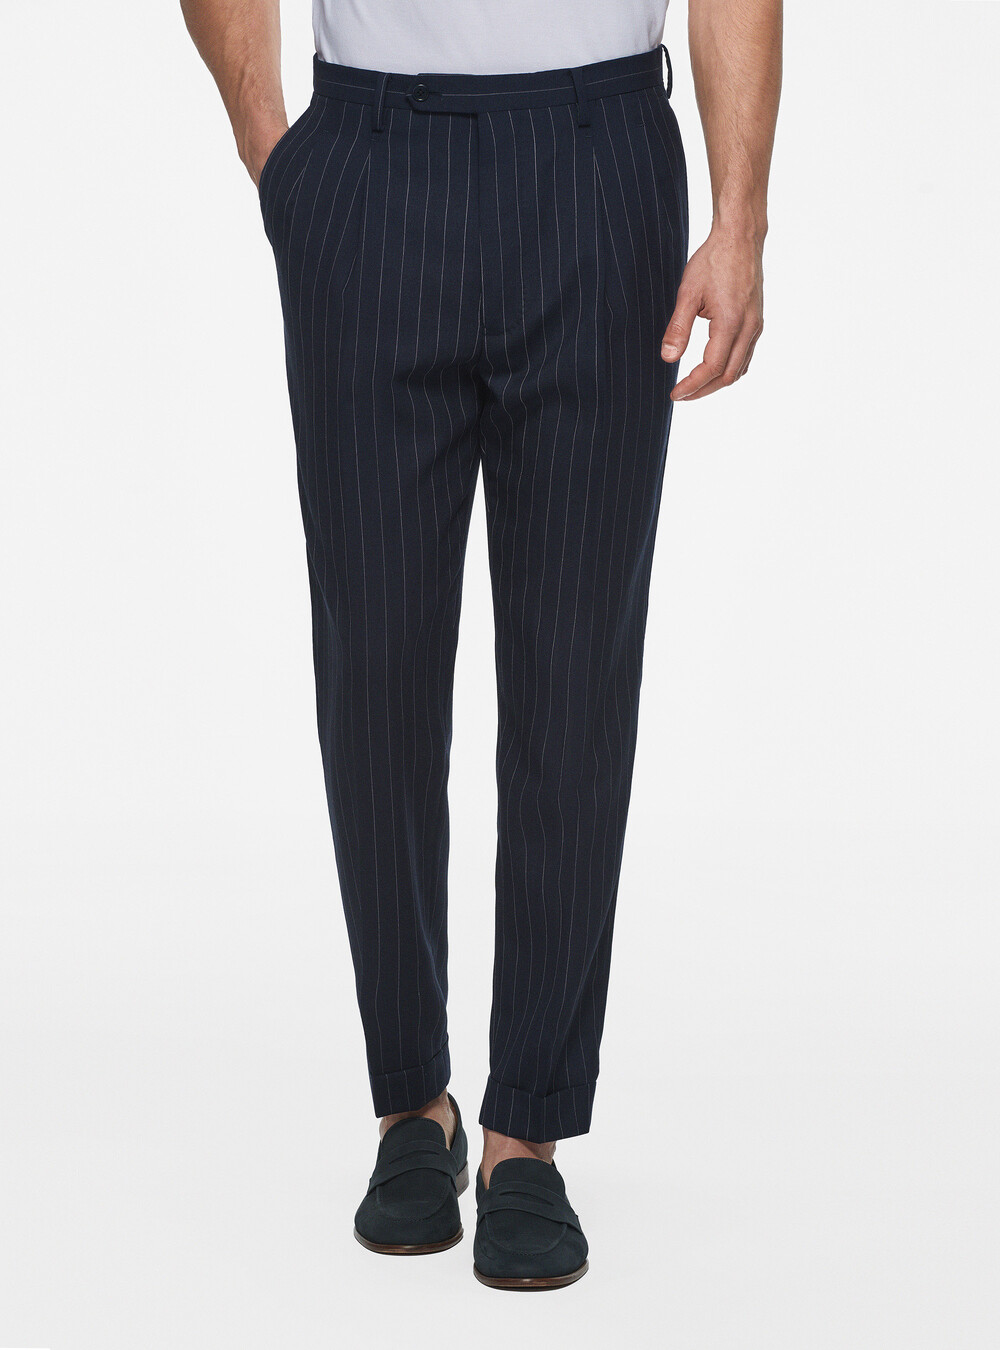 Men's Pinstripe Tailored Trousers, Wool, Black